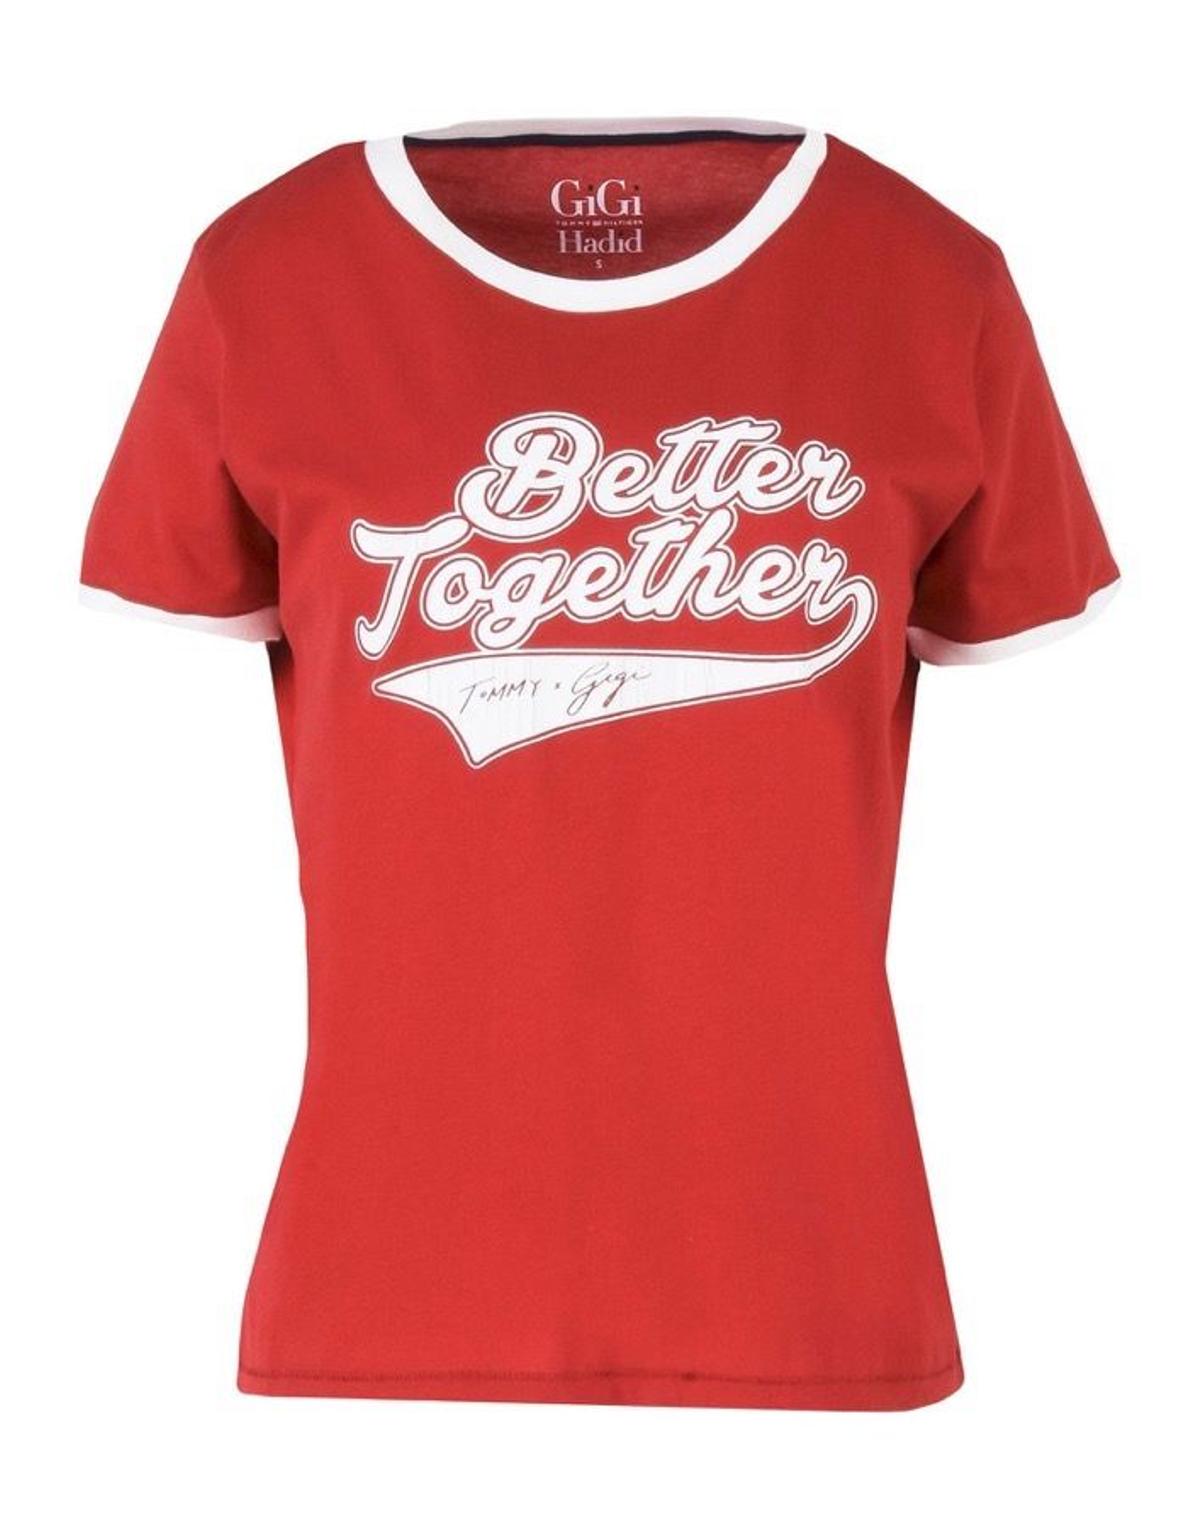 Camisetas vintage, Gigi Hadid for Tommy Hilfiger